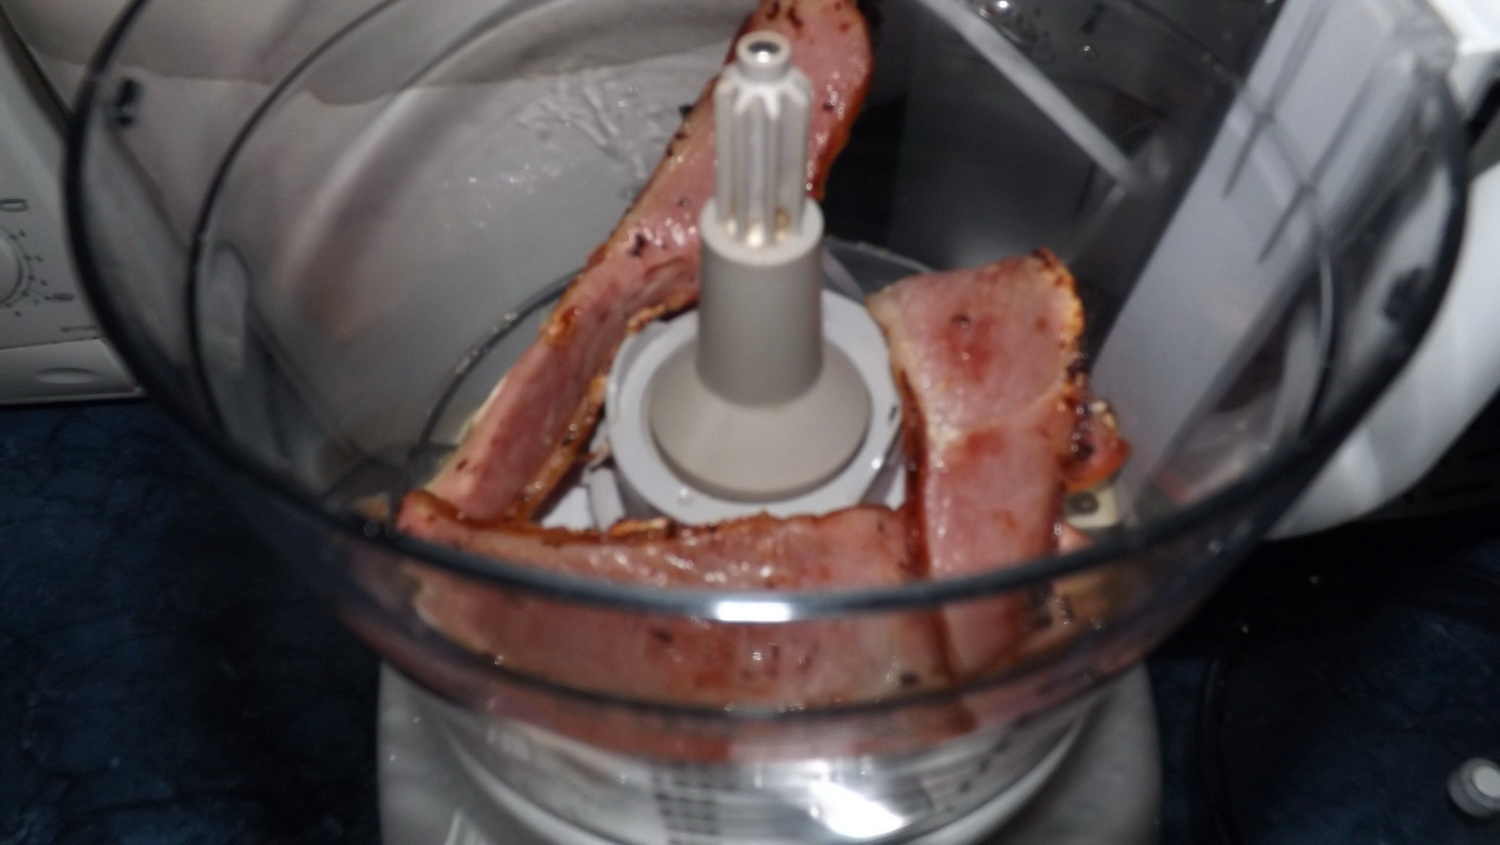 Melcisori cu dovleac sub crusta crocanta de pesmet cu bacon